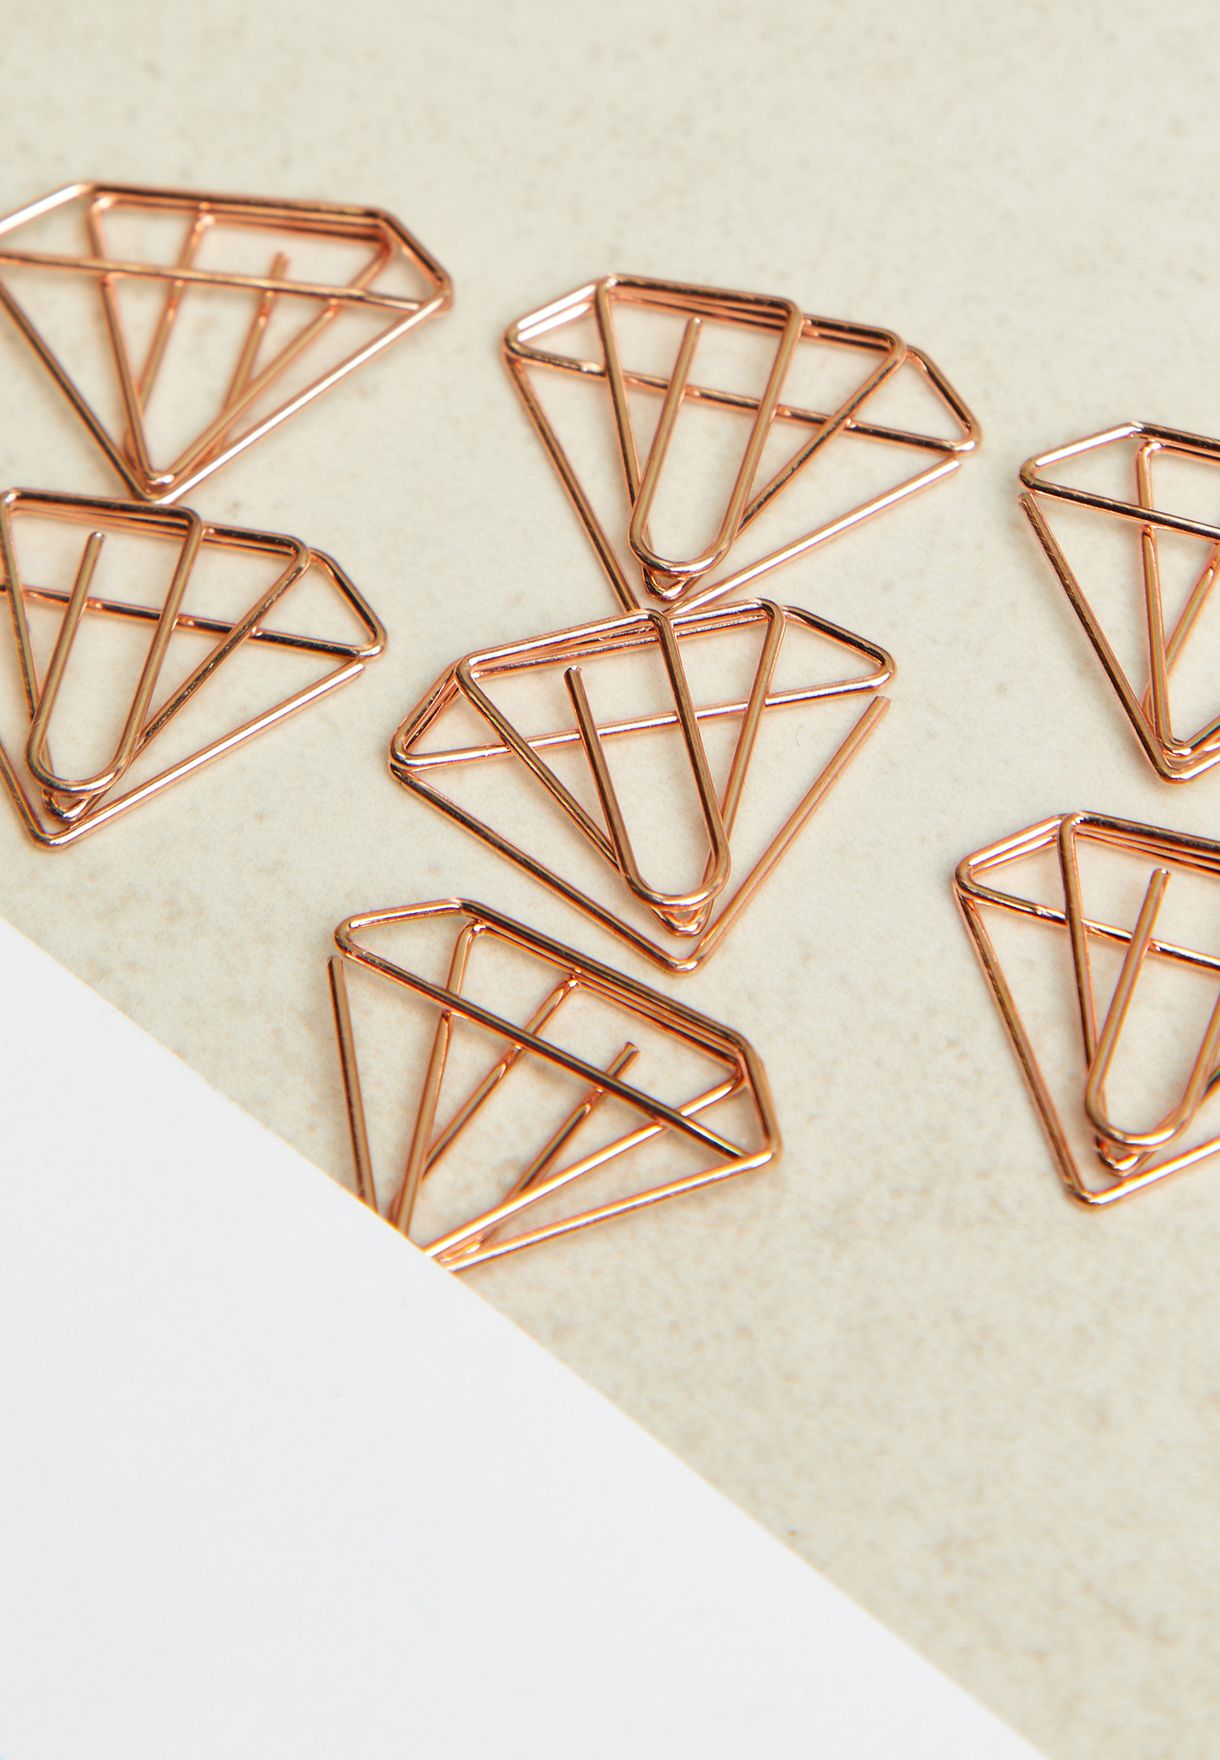 8 Piece Diamond Shaped Paper Clips